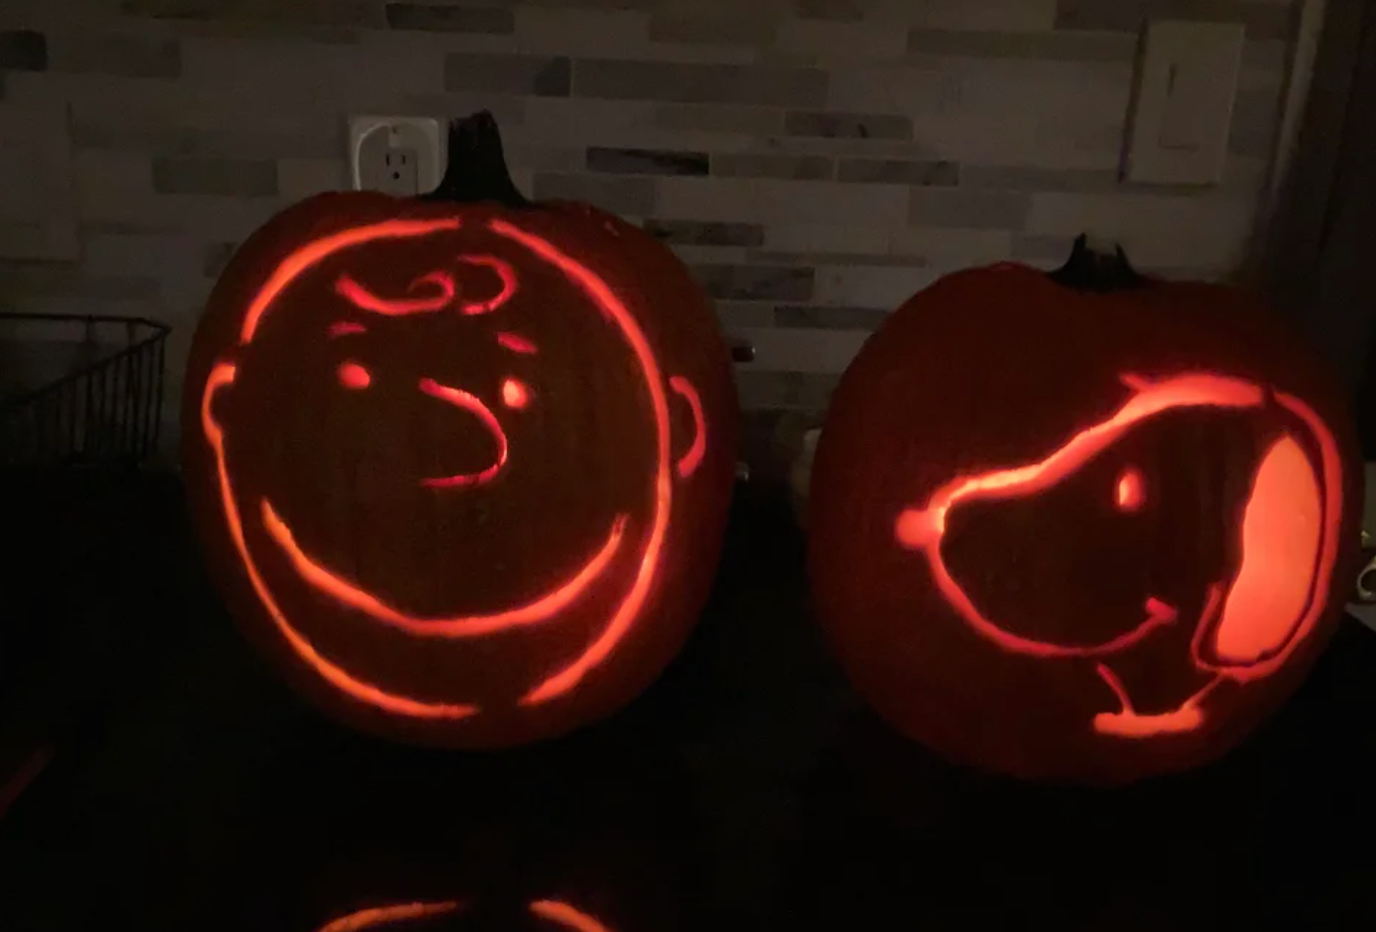 Pumpkins carved to look like Charlie Brown and Snoopy